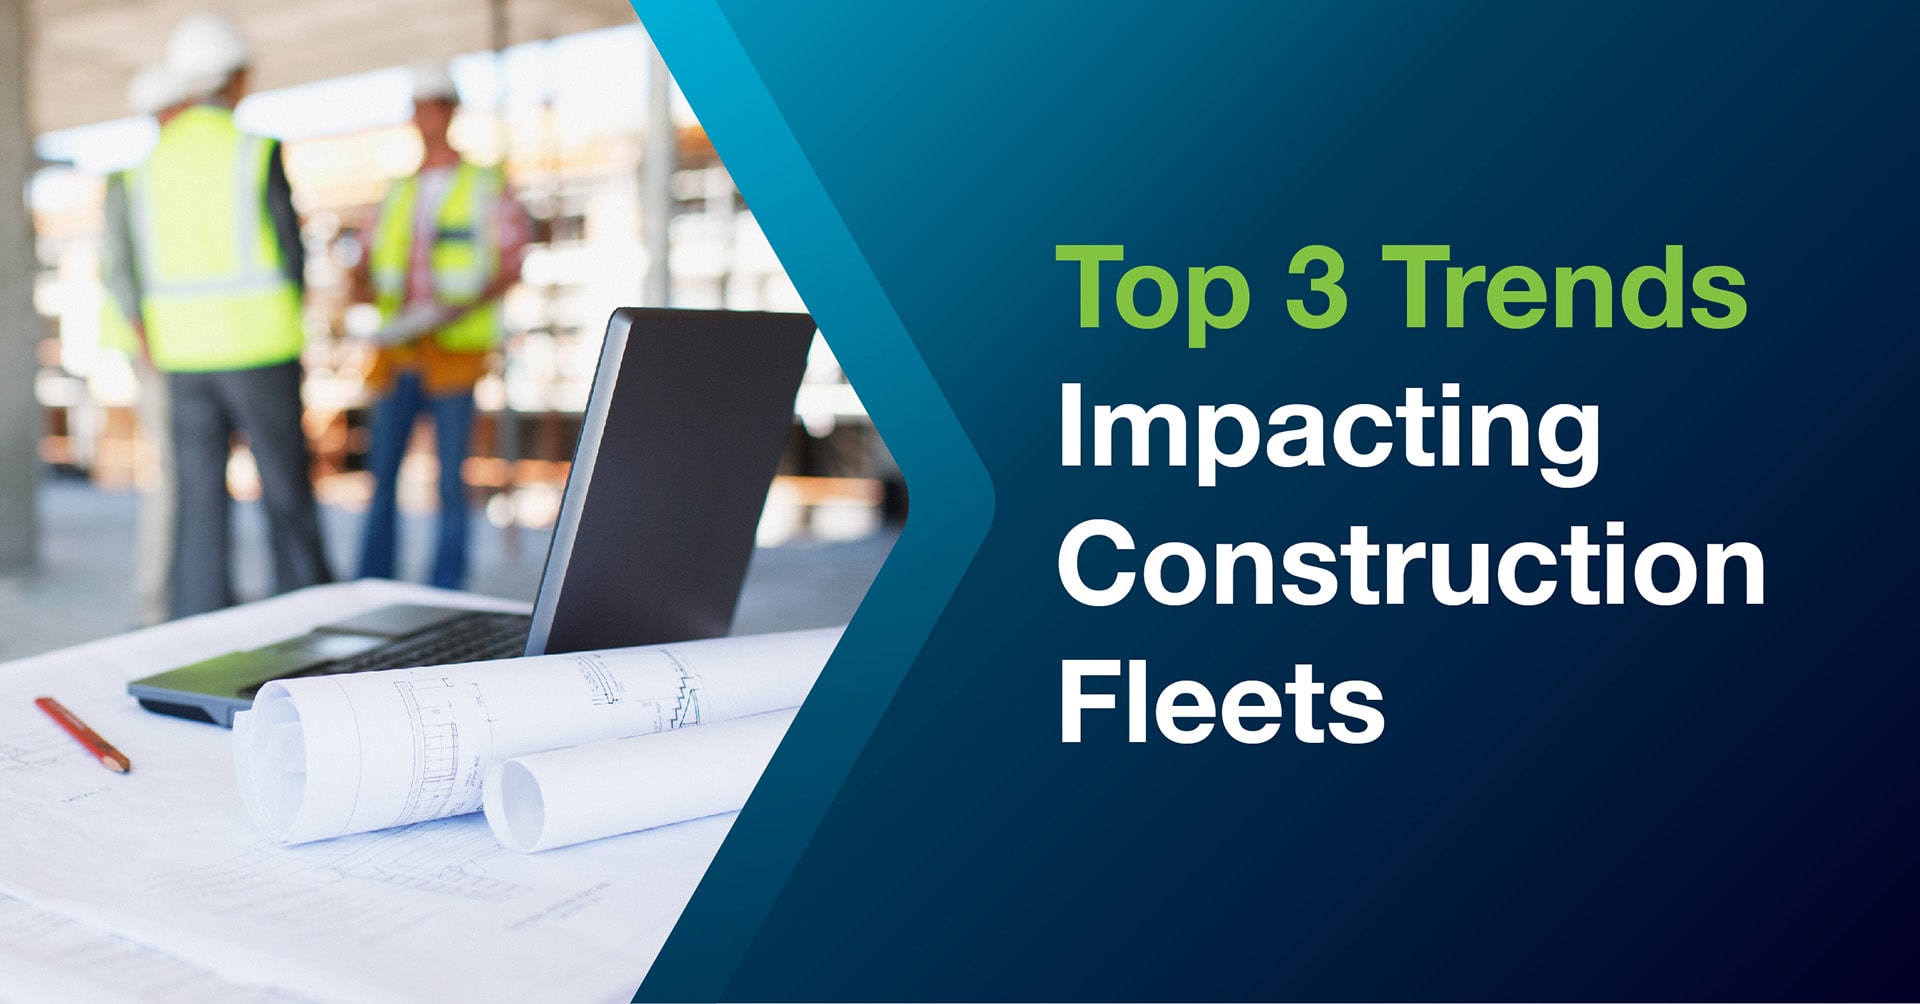 Fleet Construction Trends